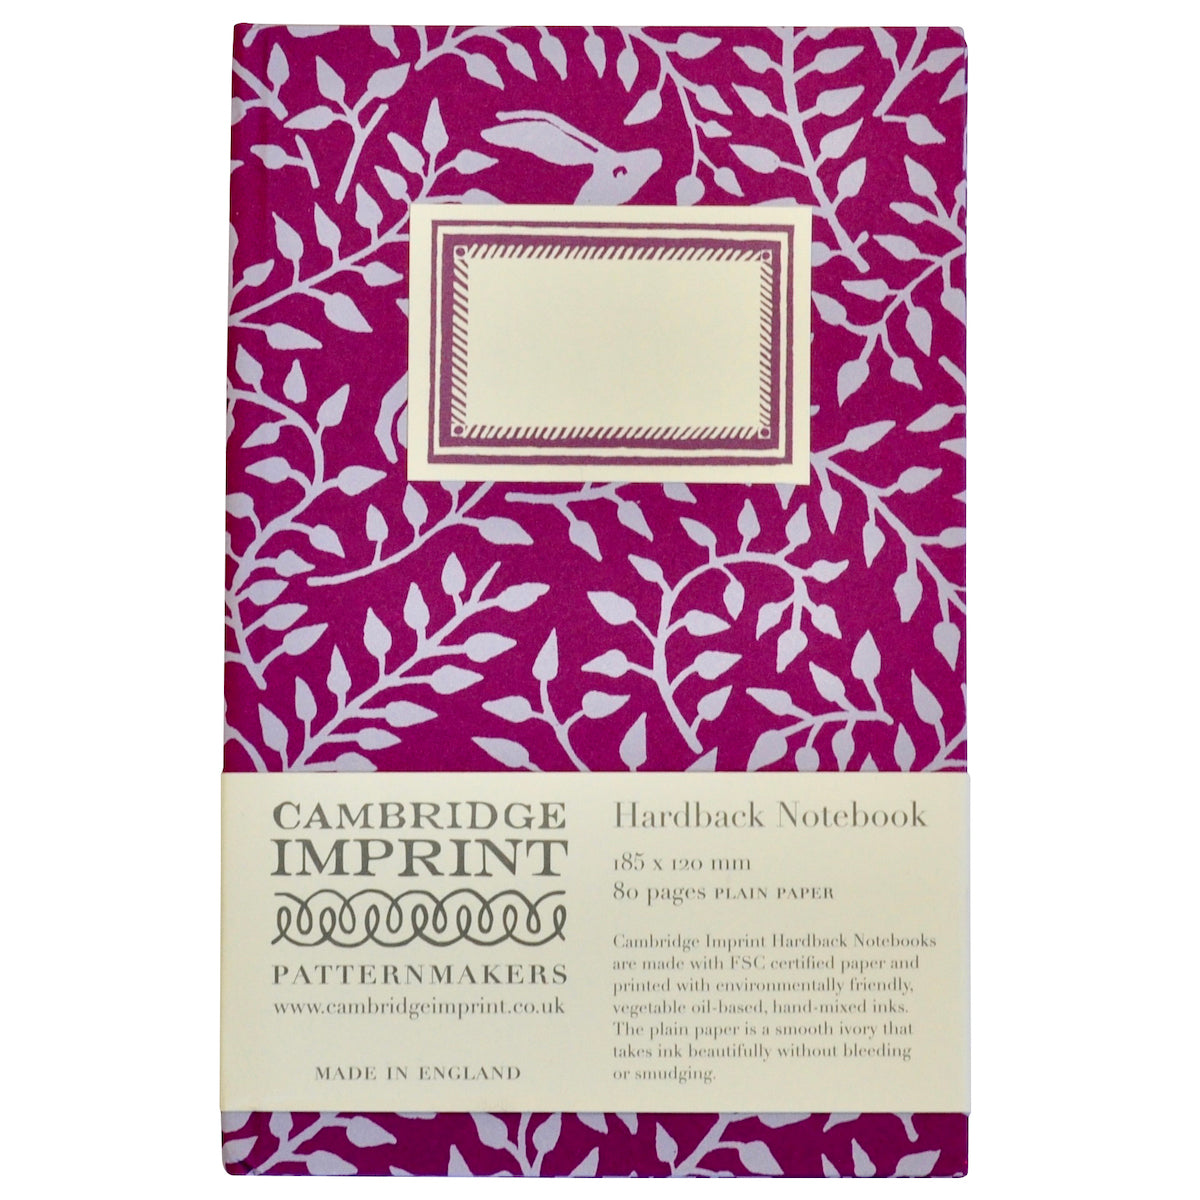 Cambridge Imprint - Hardback Notebook (Dancing Hare Violet)